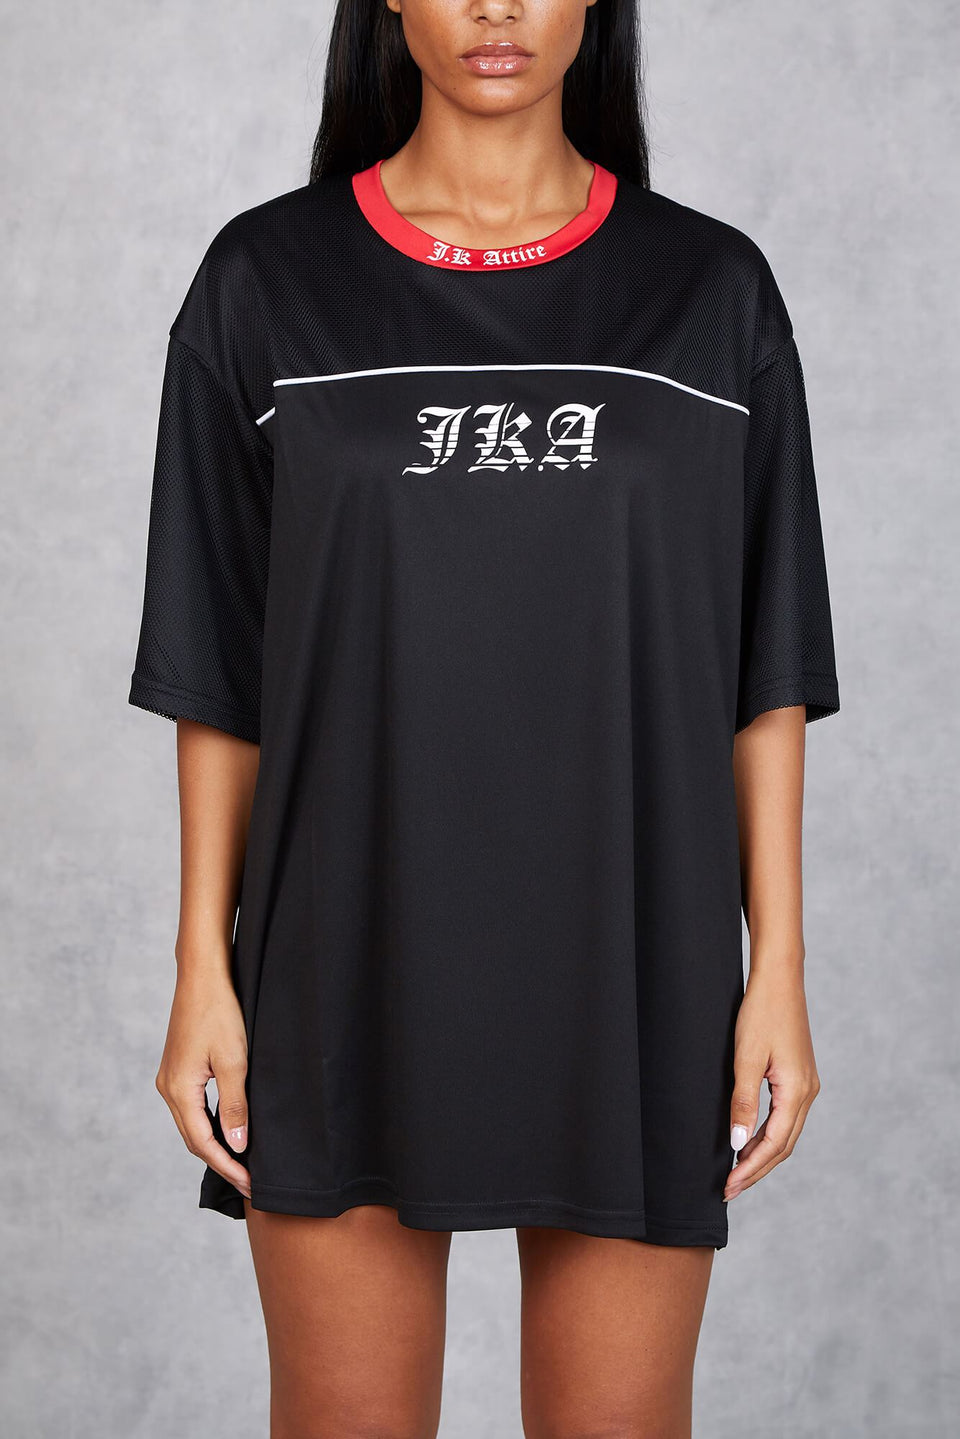 Women's Cobra Worldwide T-Shirt Dress - Black